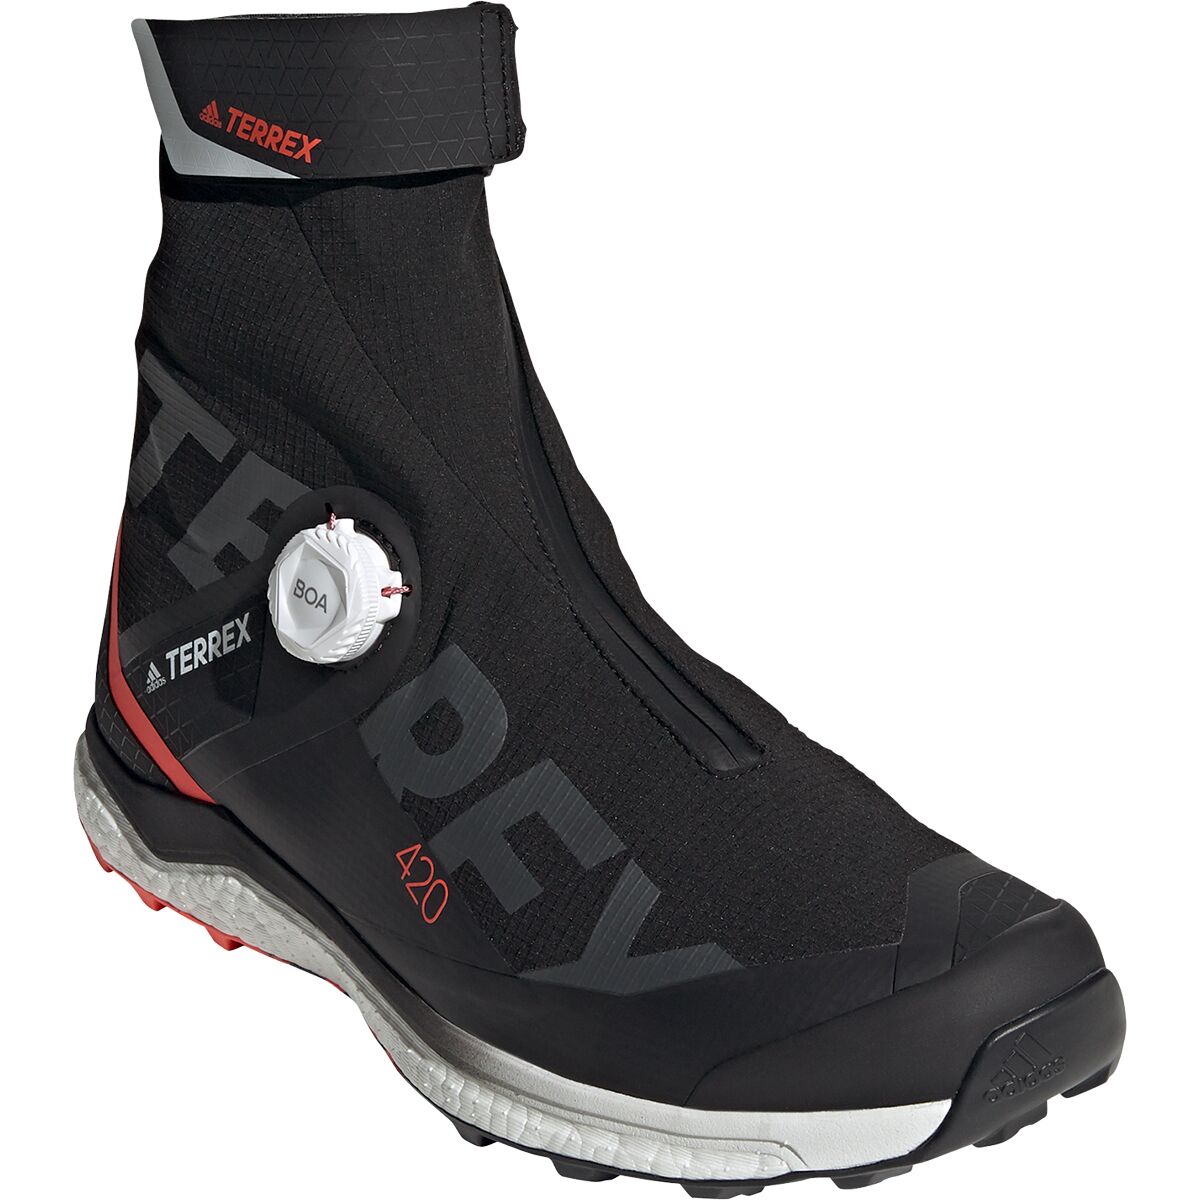 Adidas adidas terrex 420 Outdoor Terrex Agravic Tech Pro Trail Running Shoe - Men's